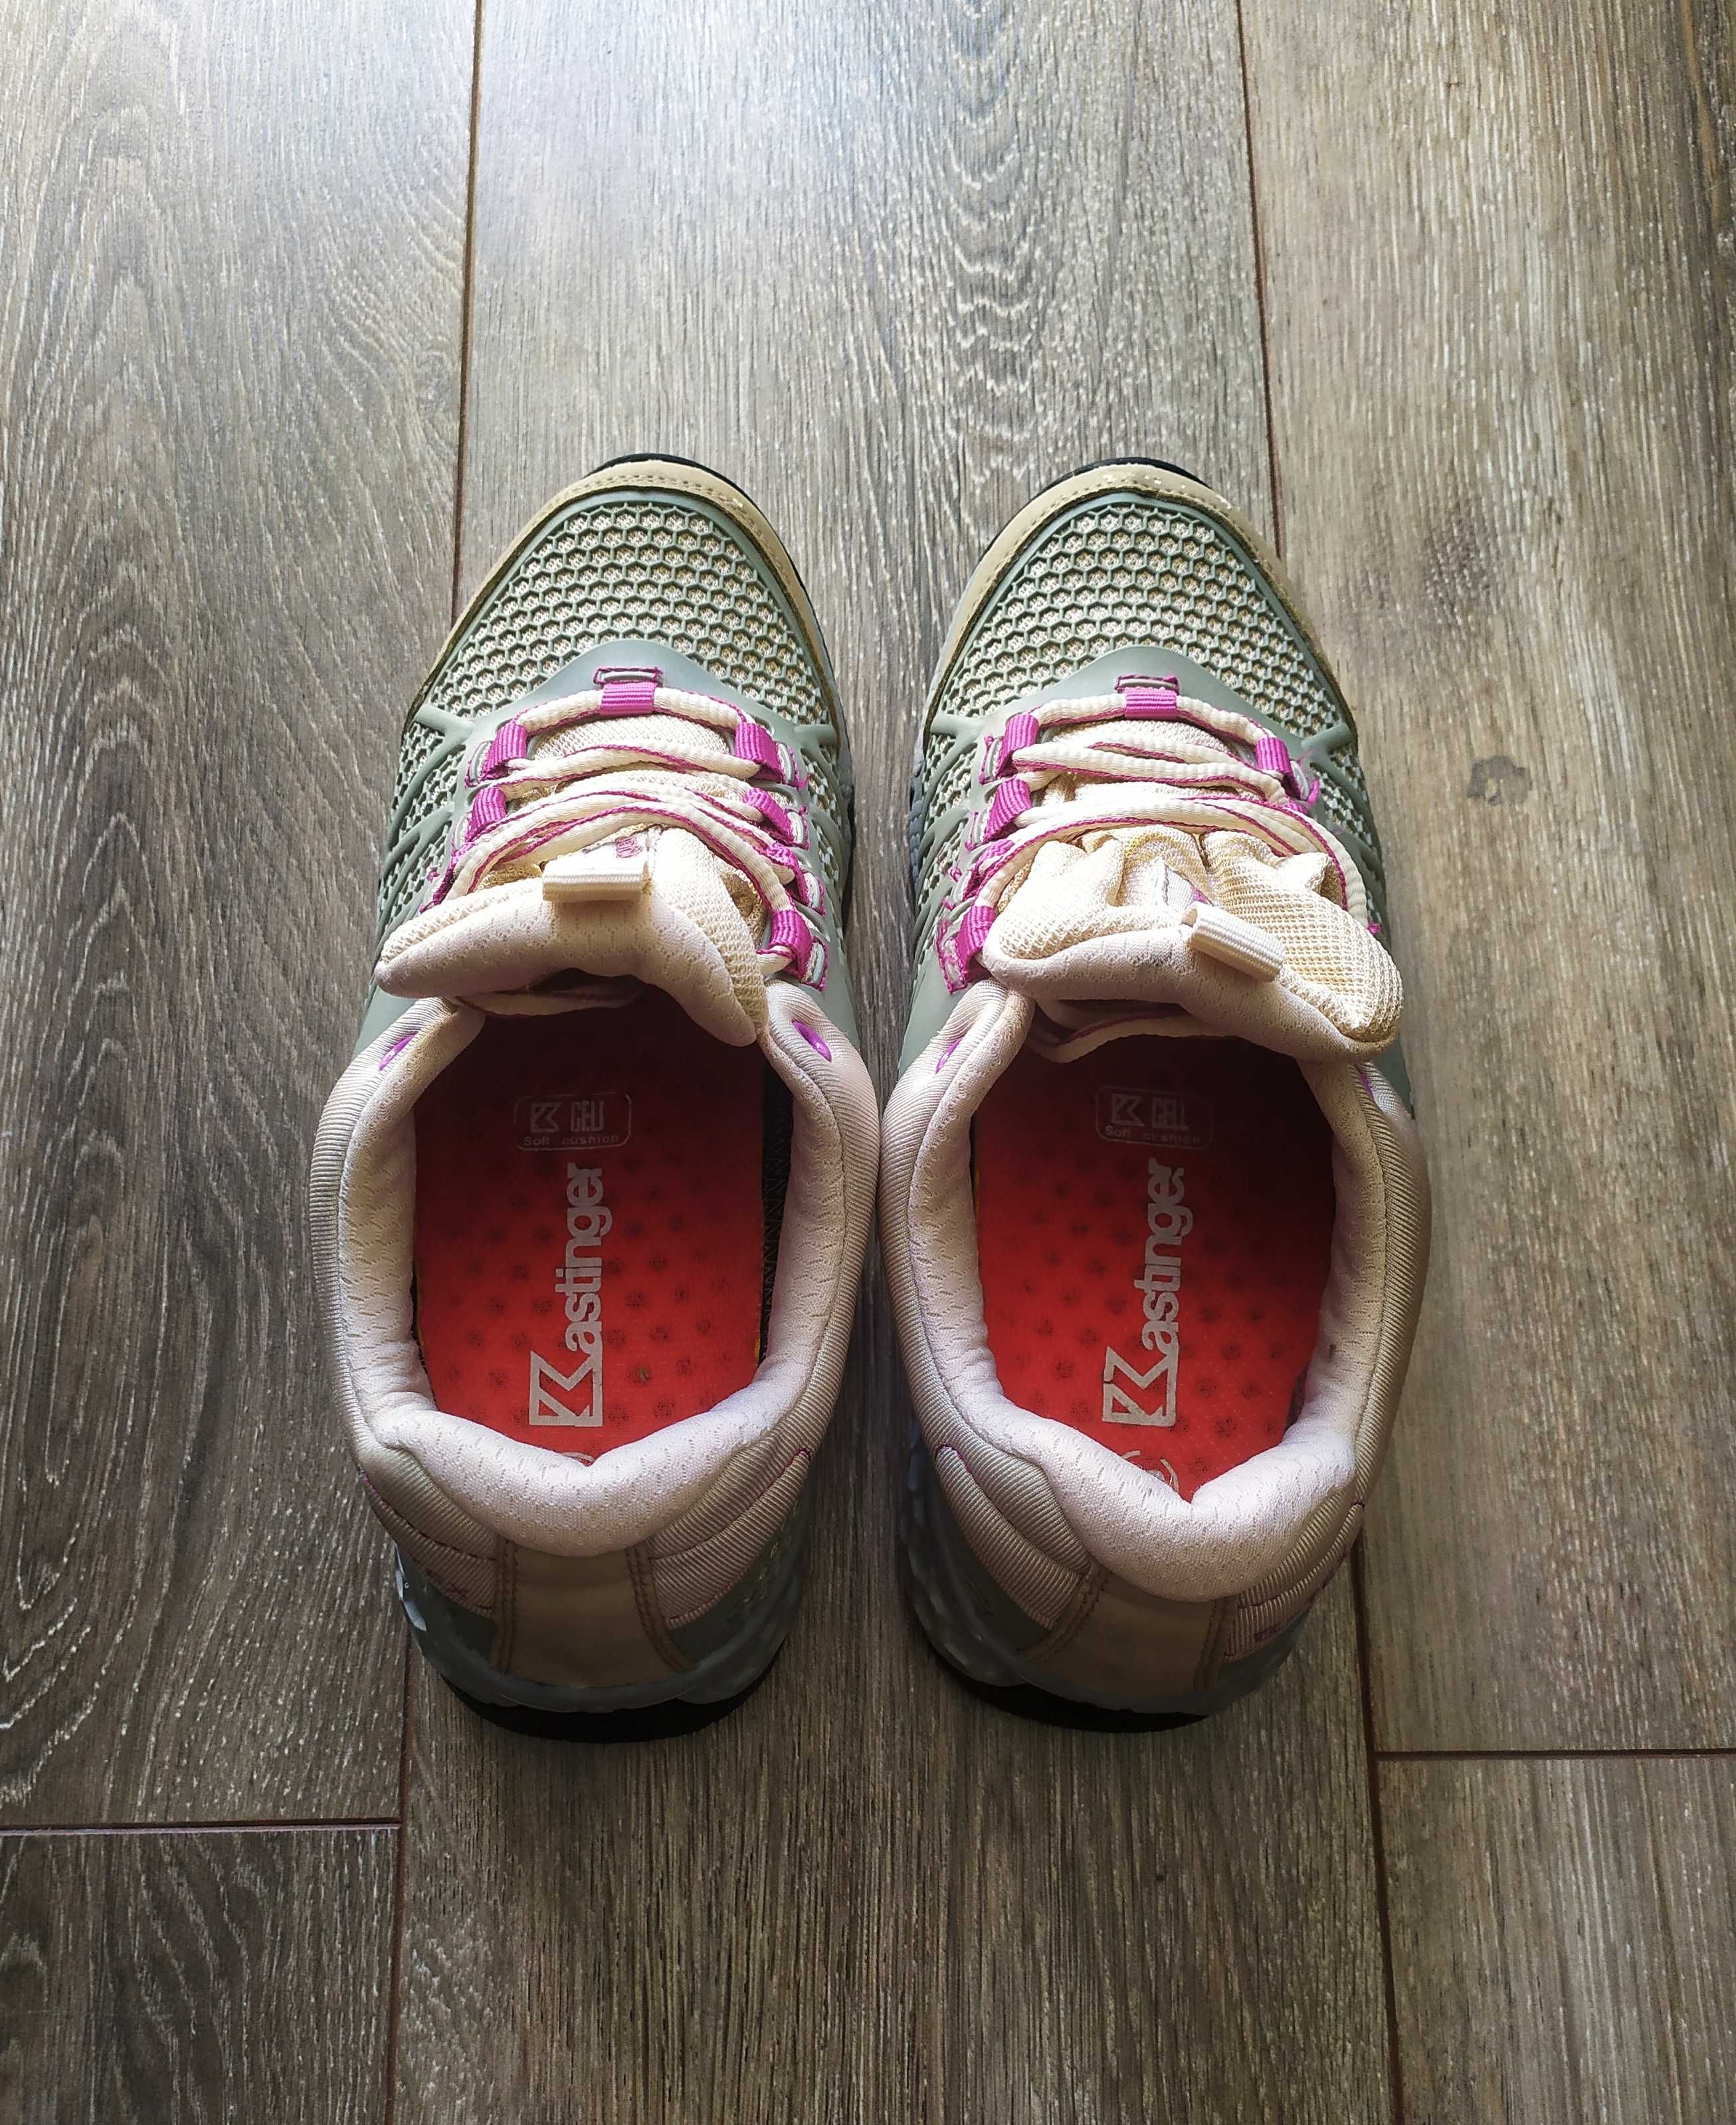 Kastinger buty trekkingowe 38 kolor beżowo-różowy